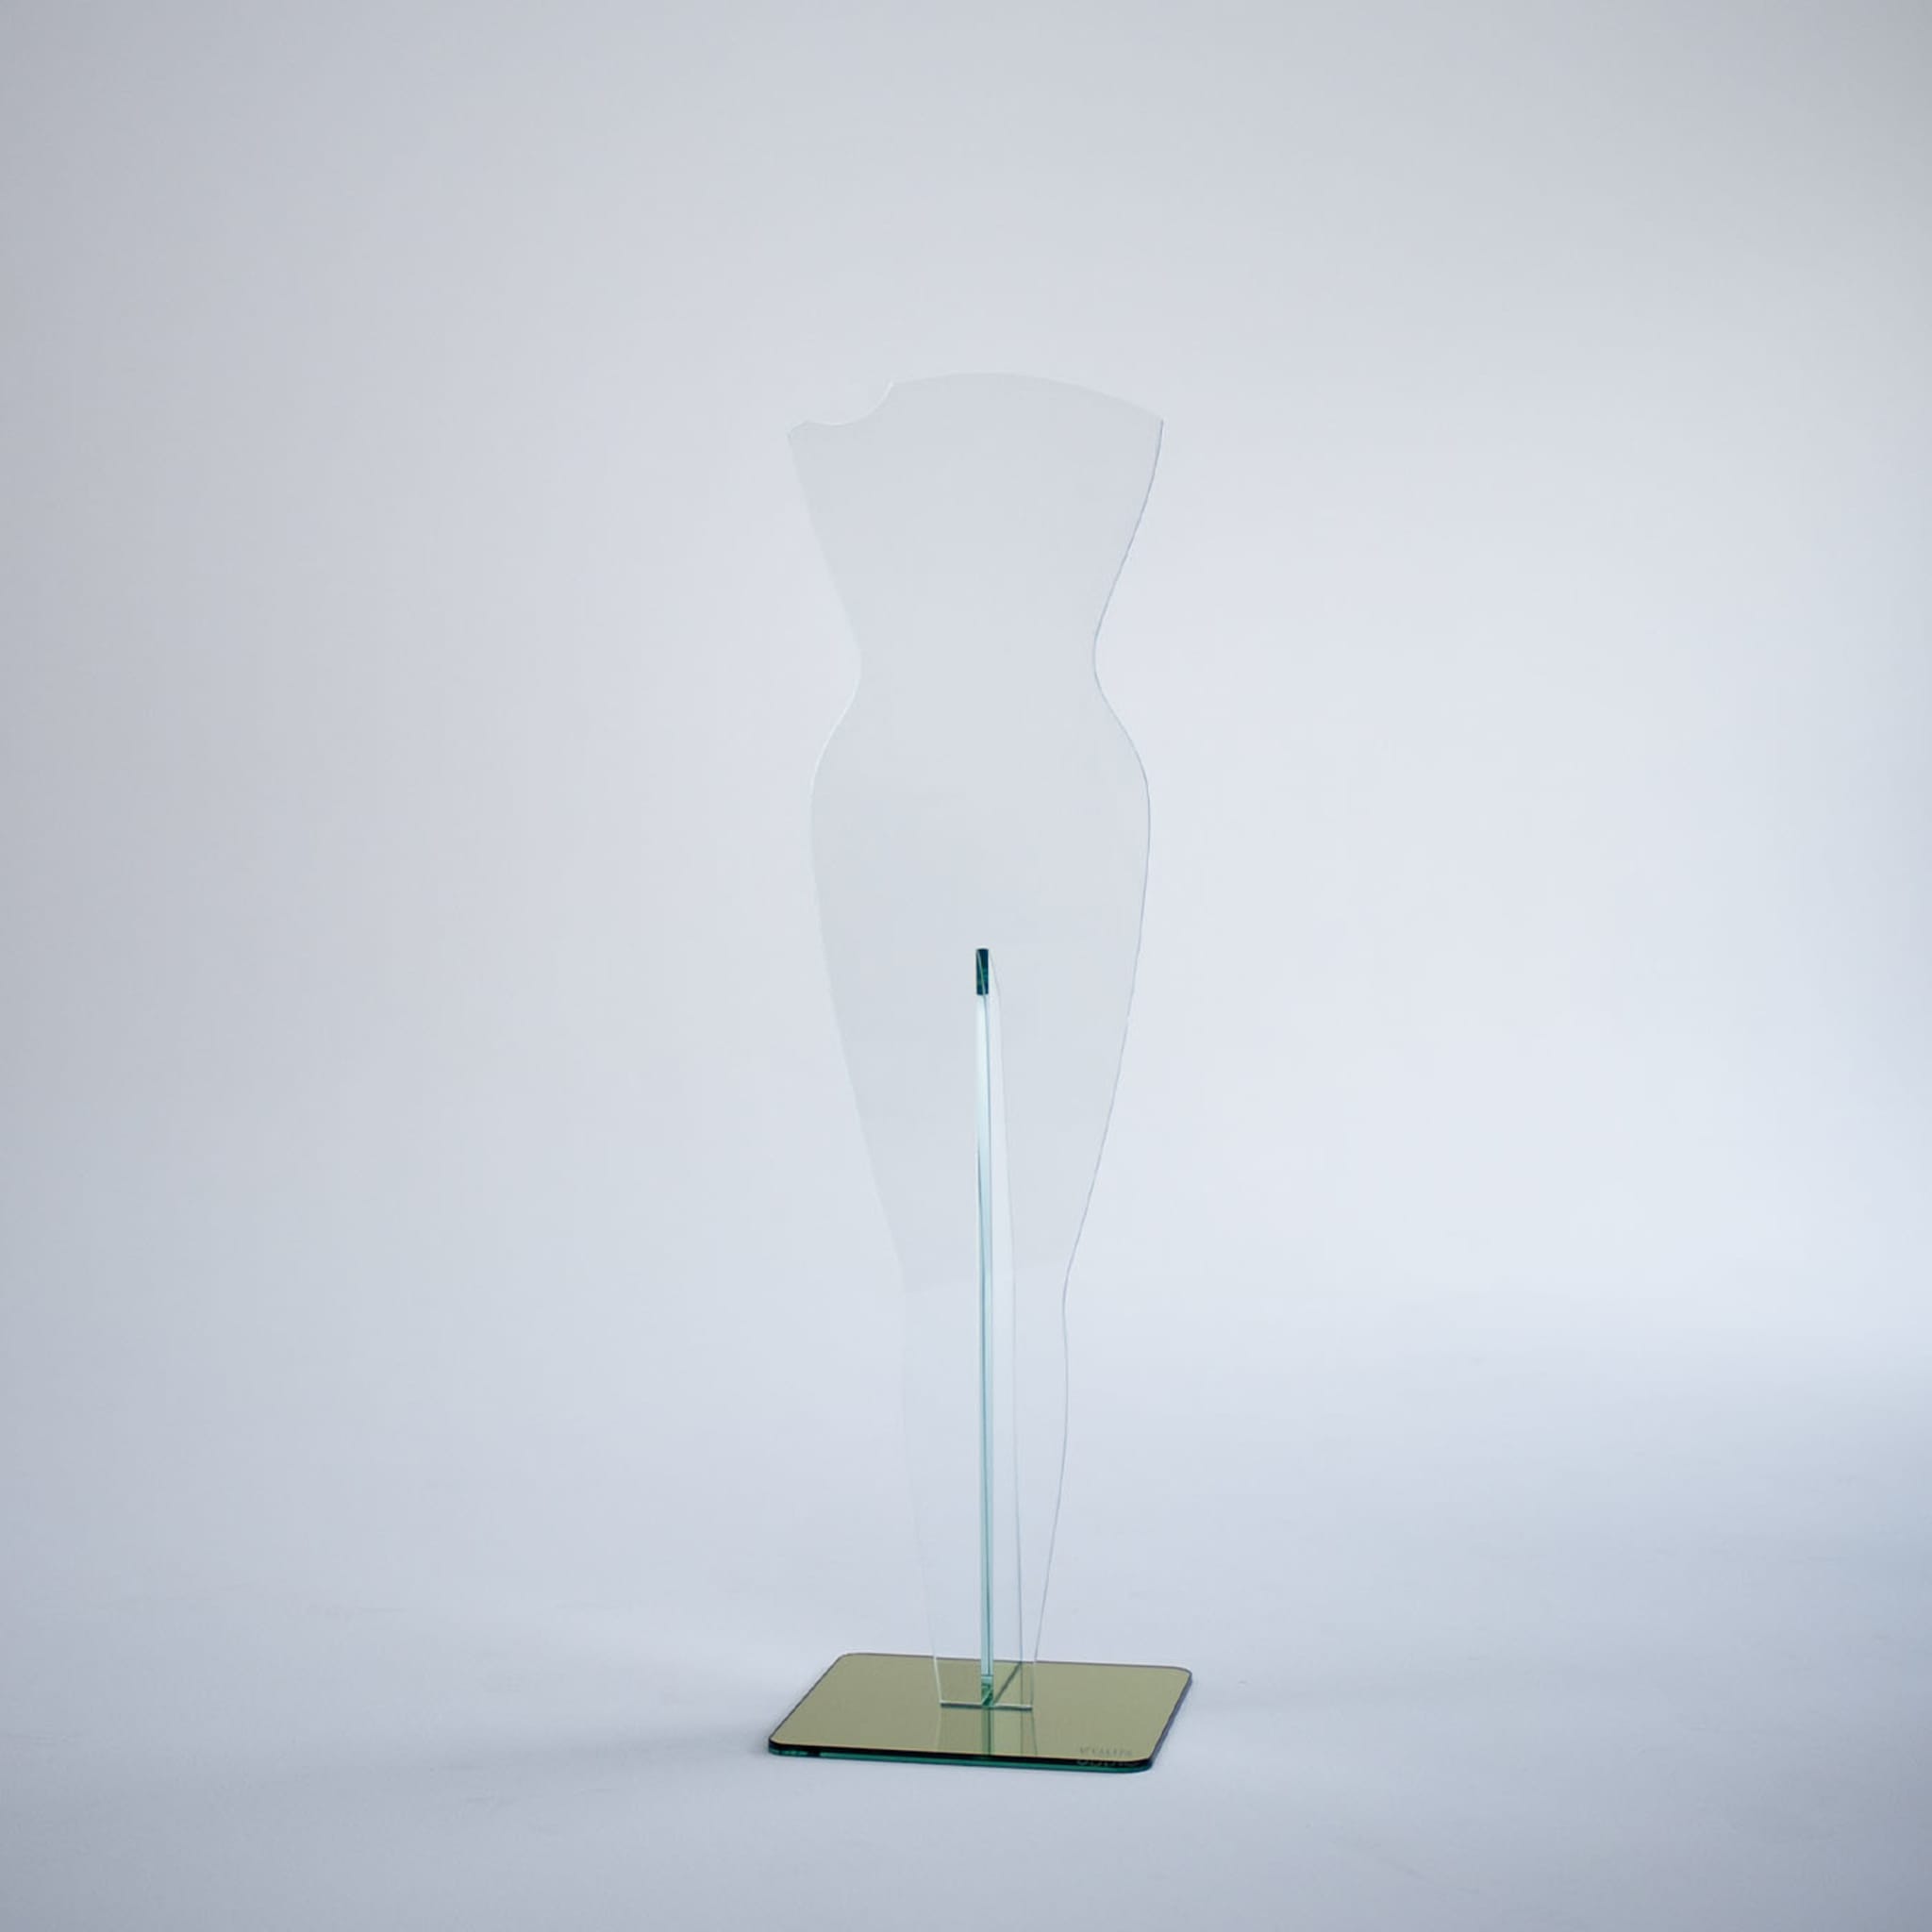 Alida Gold Glass Sculptural Coat Stand by Andrea Petterini - Alternative view 1